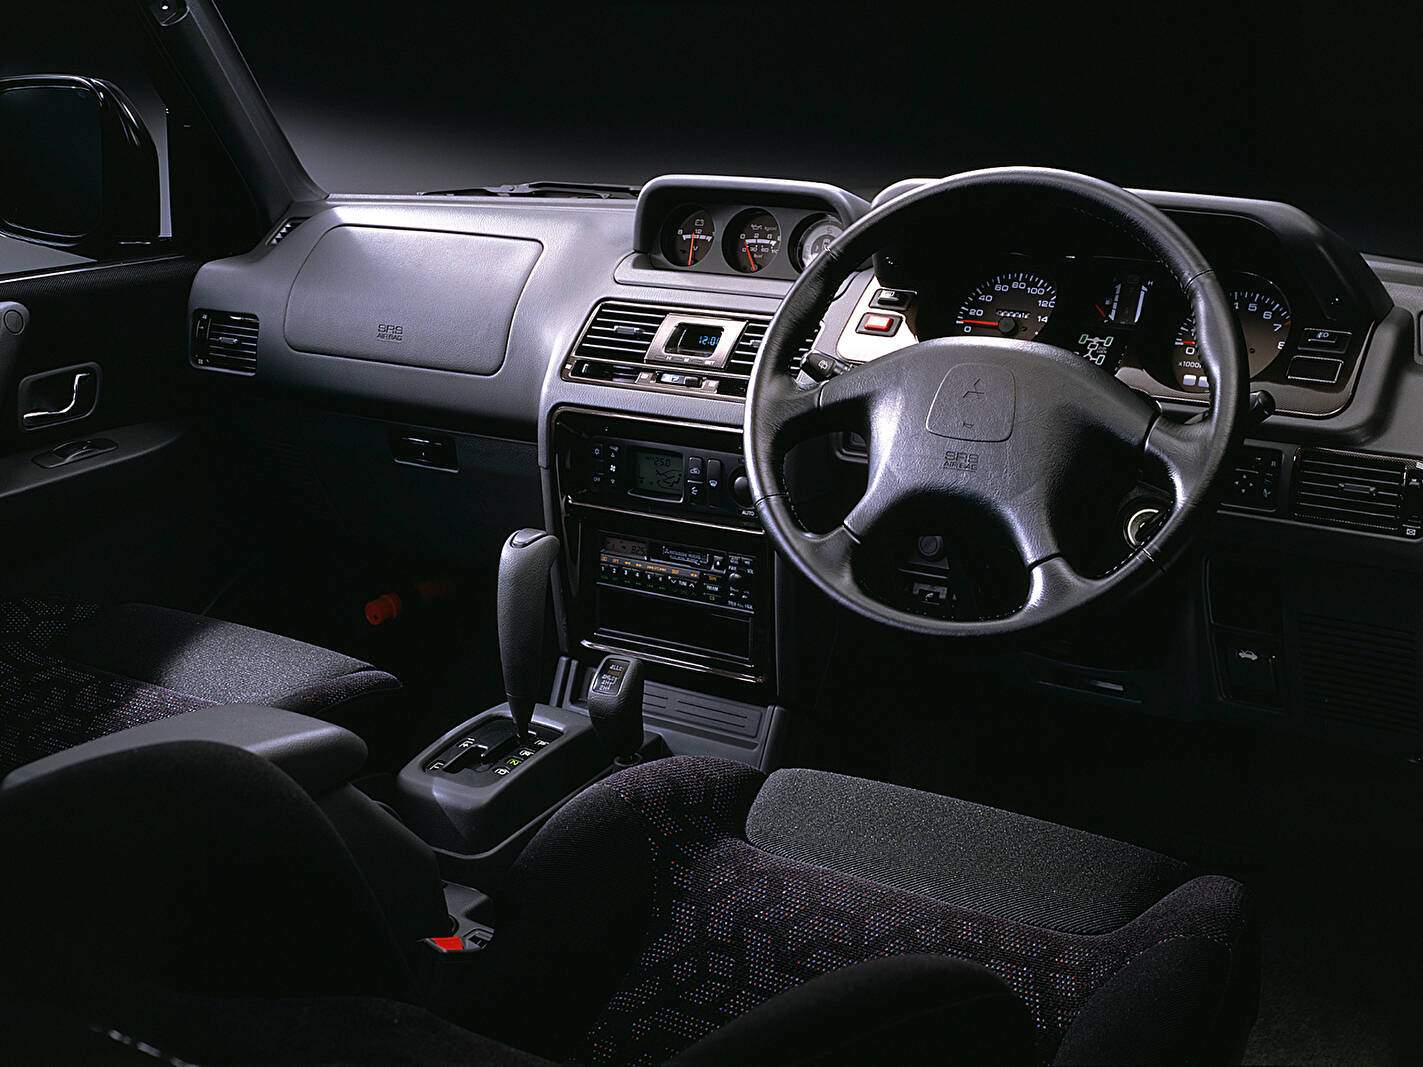 Mitsubishi Pajero II Evolution (1997-1999),  ajouté par fox58